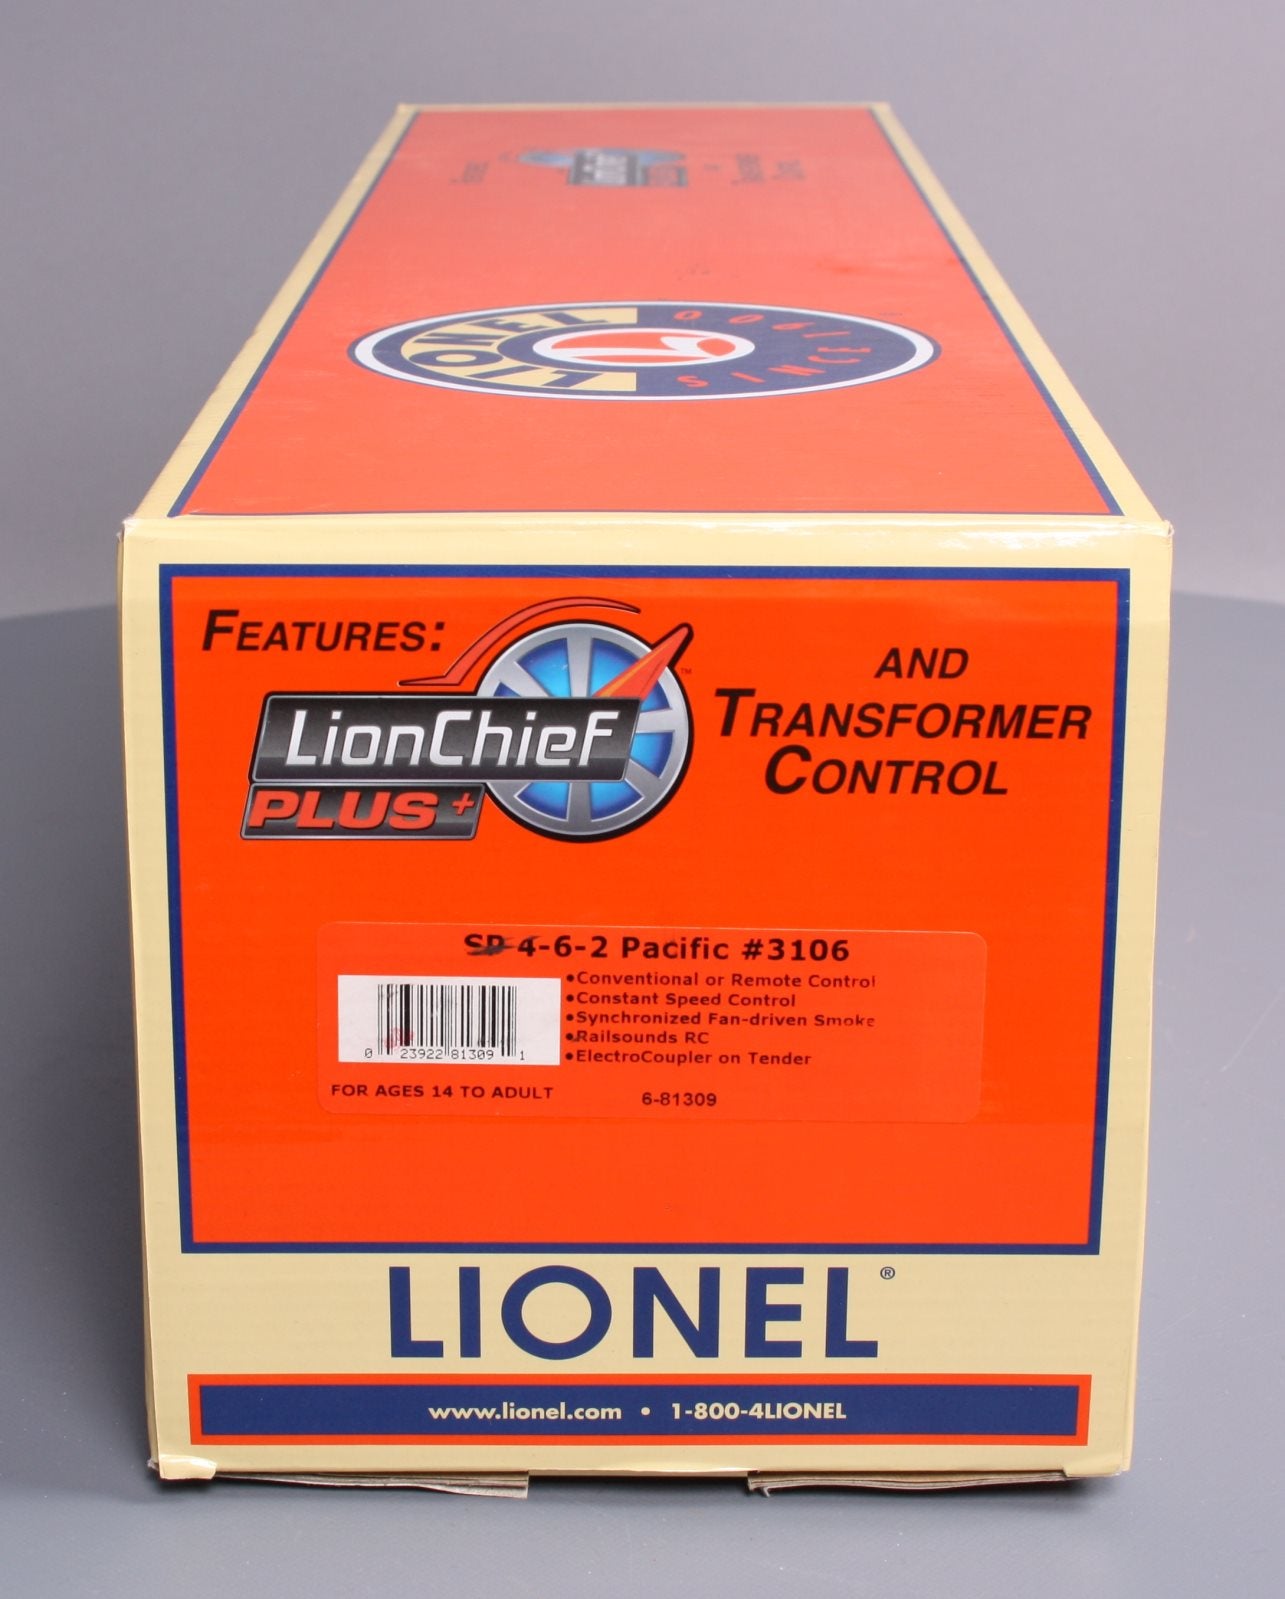 Lionel 6-81309 SP LionChief Plus 4-6-2 Pacific Steam Locomotive #3106